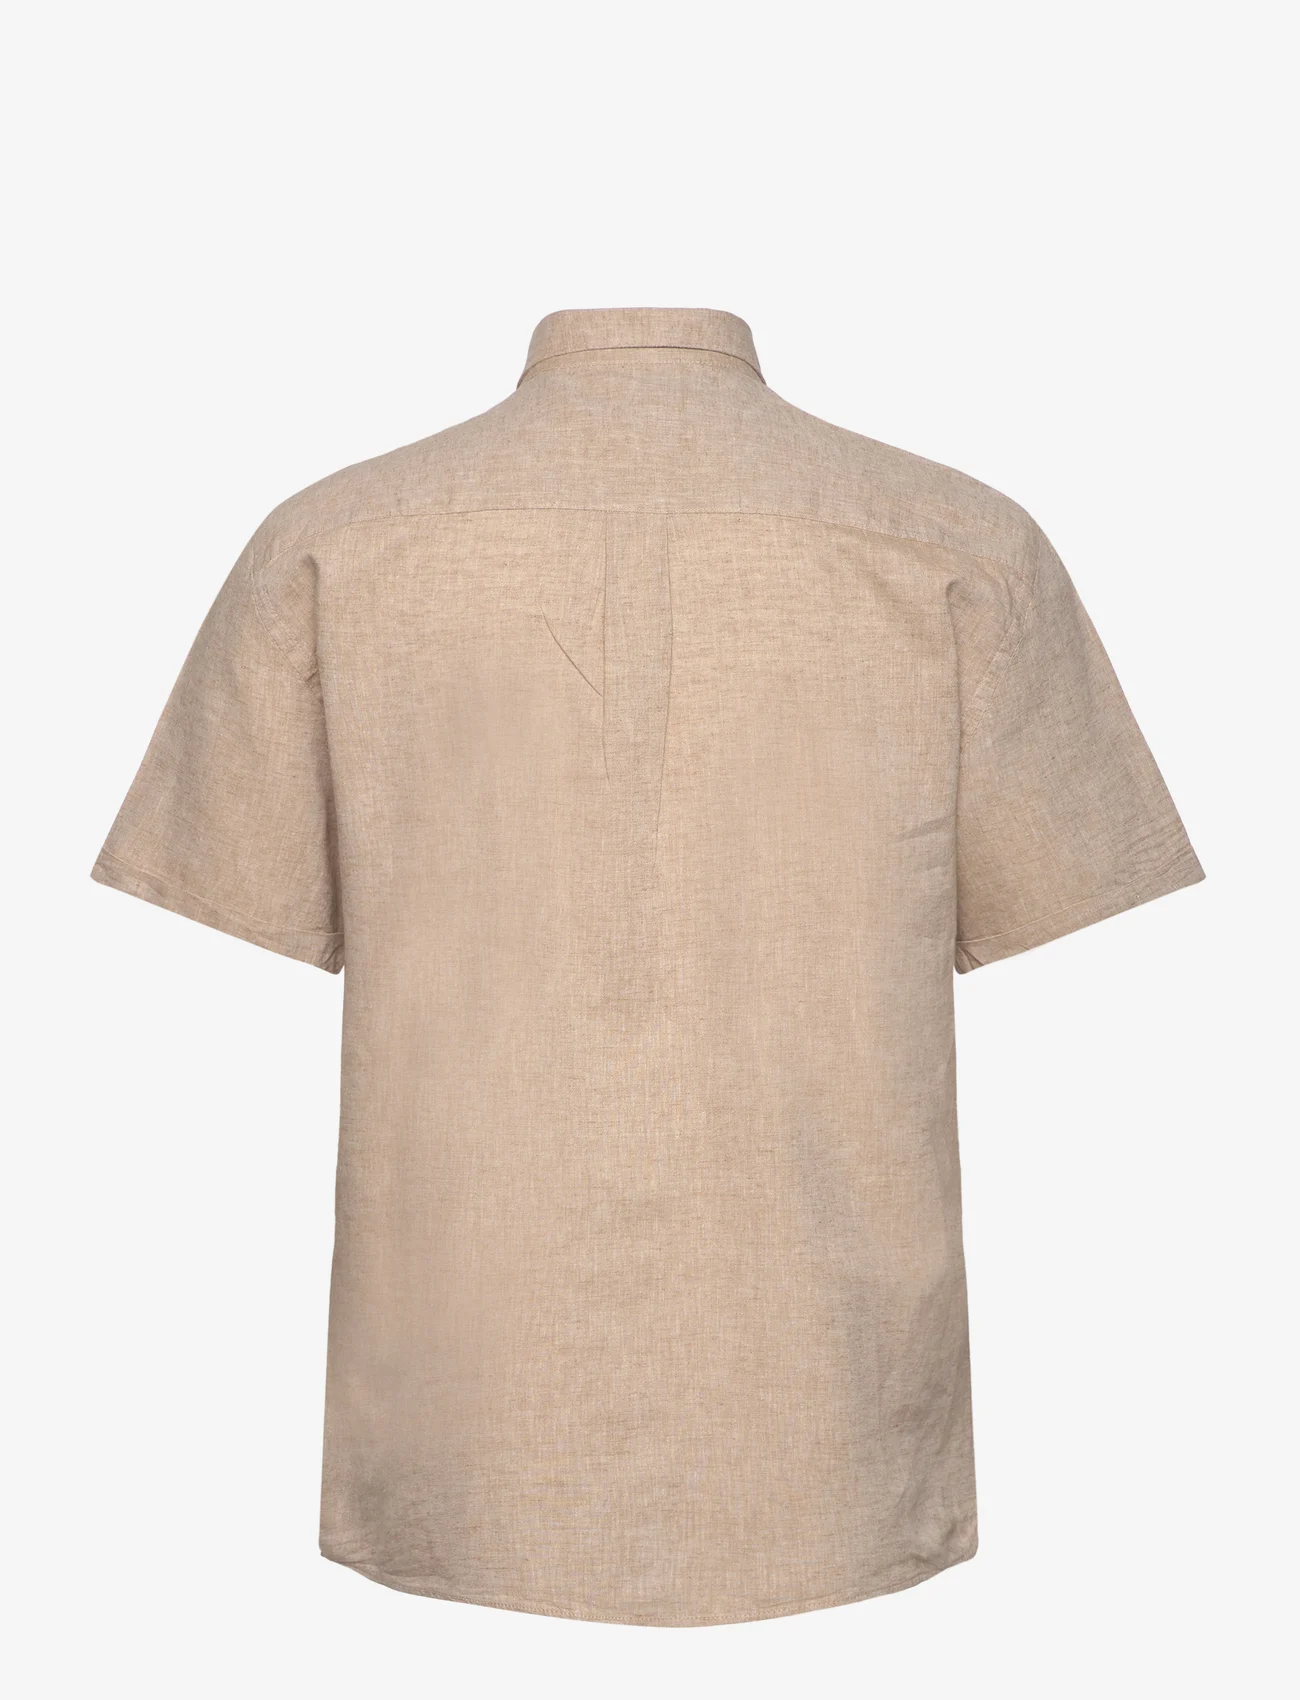 Lindbergh - Cotton/linen shirt S/S - linneskjortor - mid sand - 1